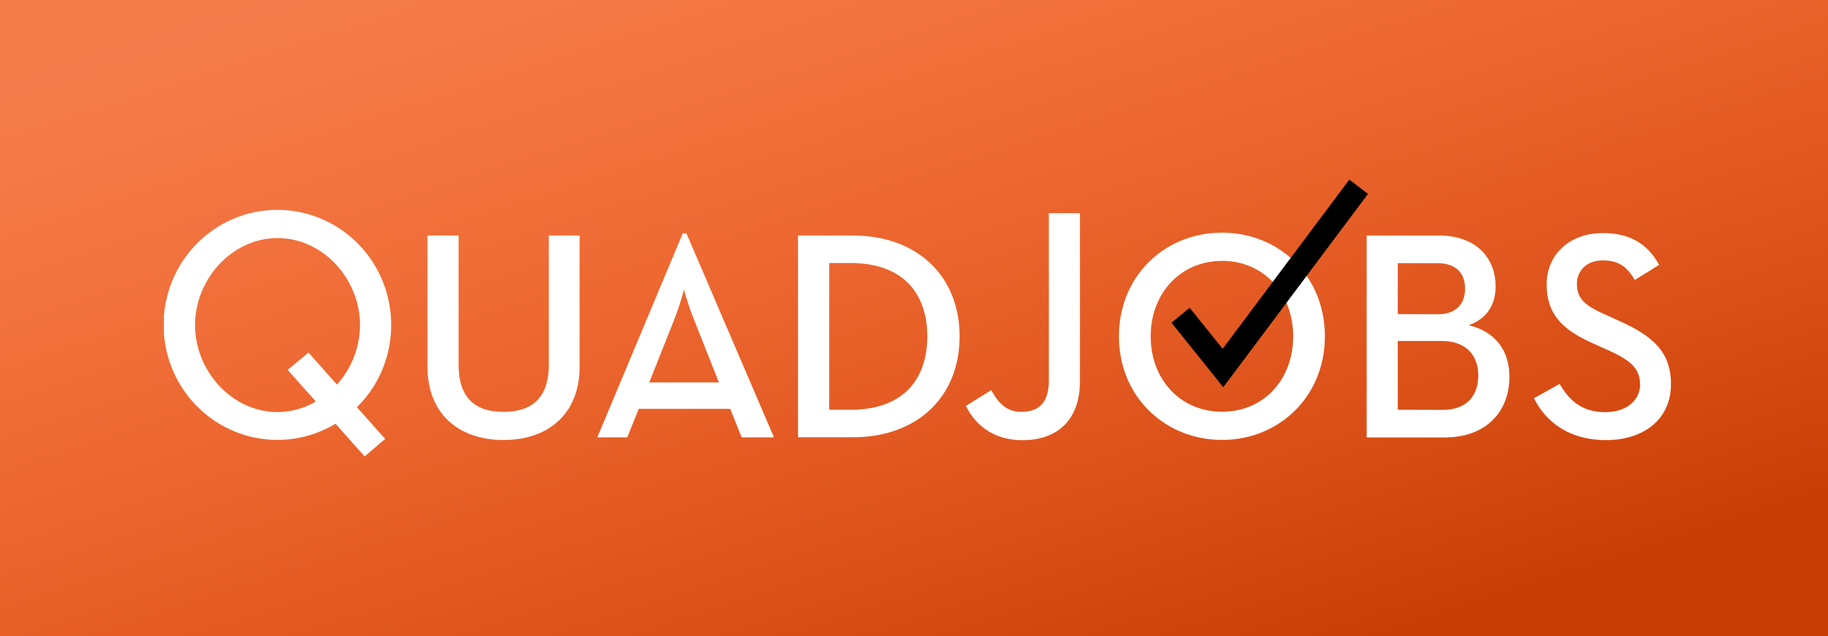 quad jobs logo